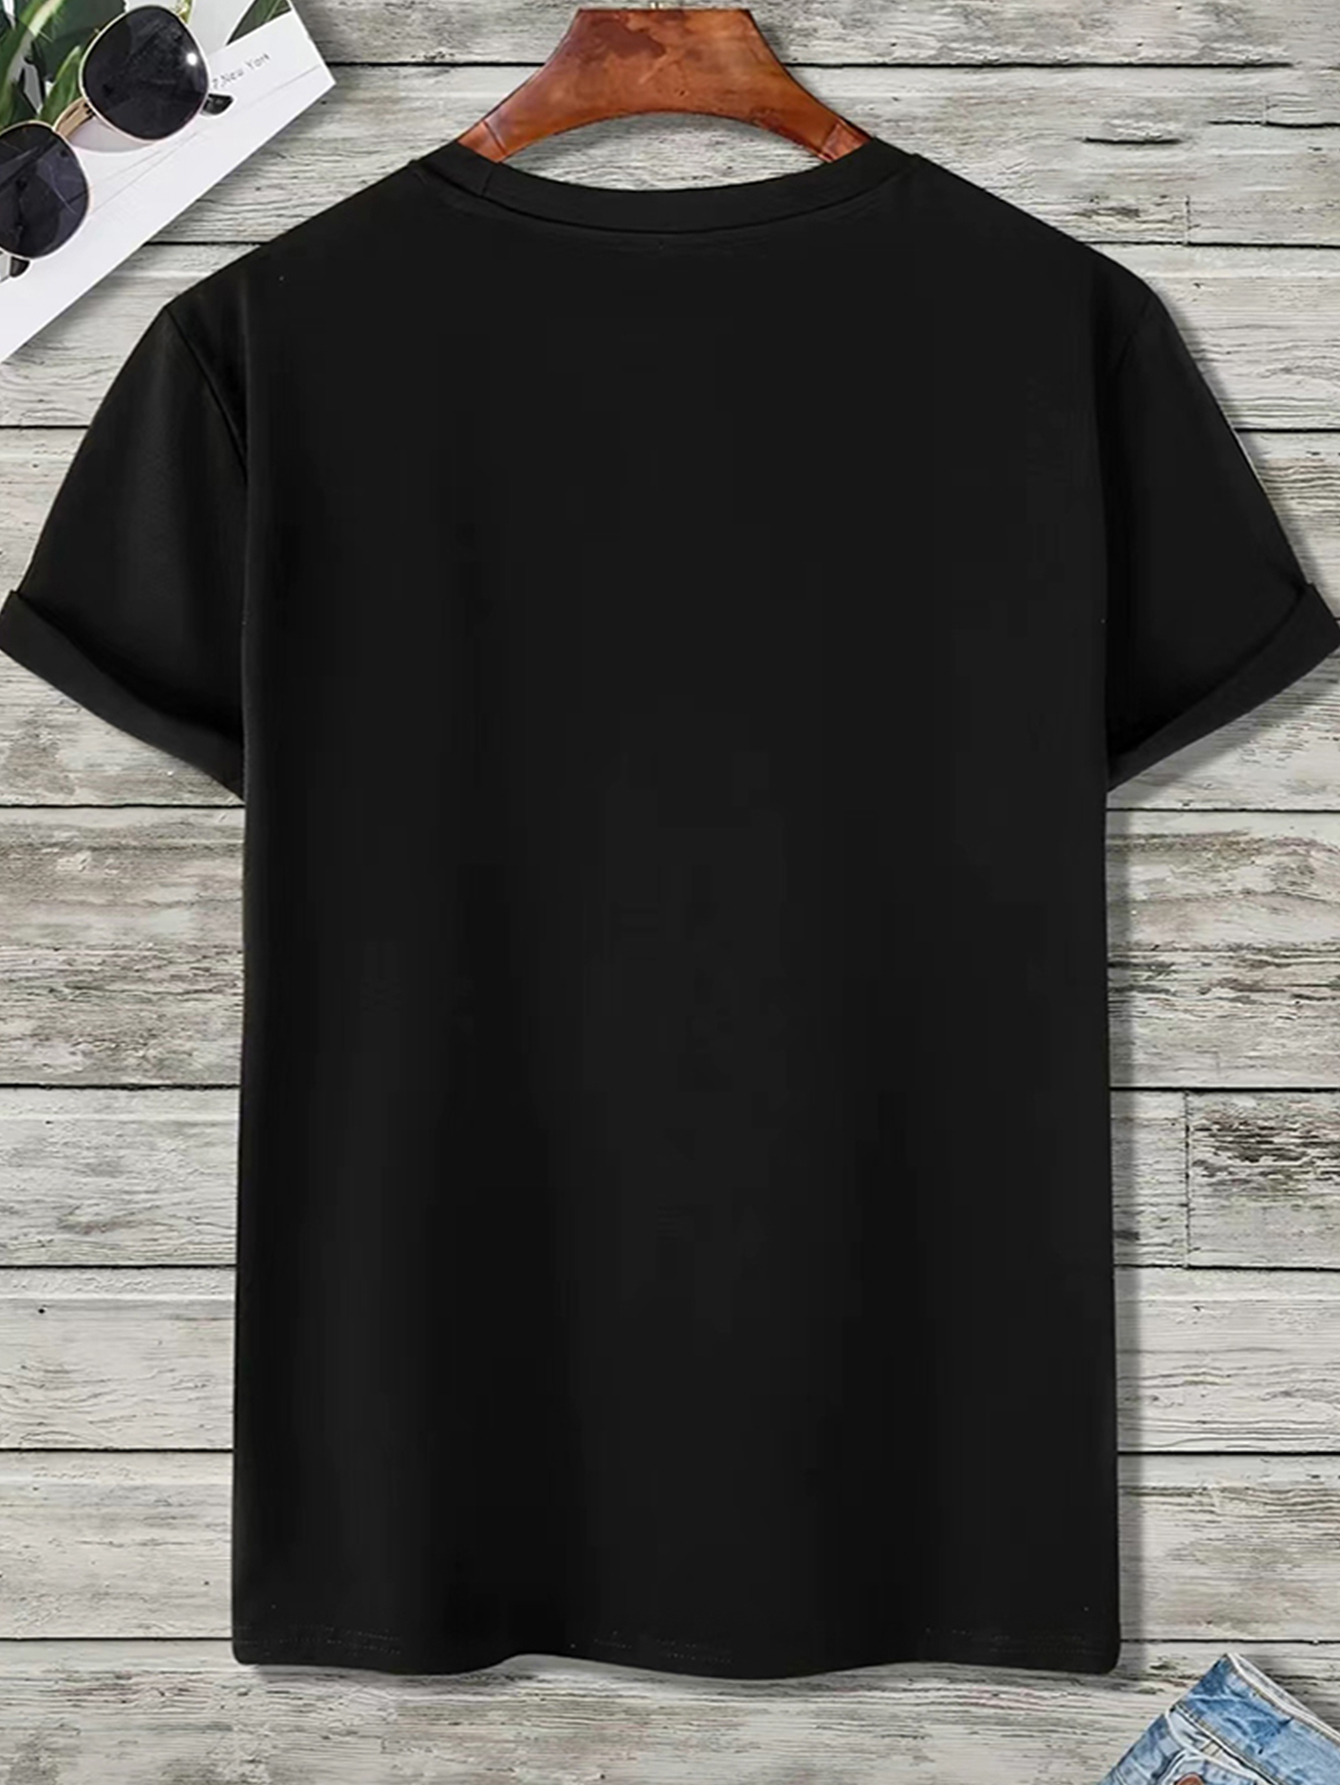 Kids Boy Girl Cartoon Ninja Kidz Short Sleeve T-shirt Printed Crew Neck Tee  Shirt Summer Casual Tops